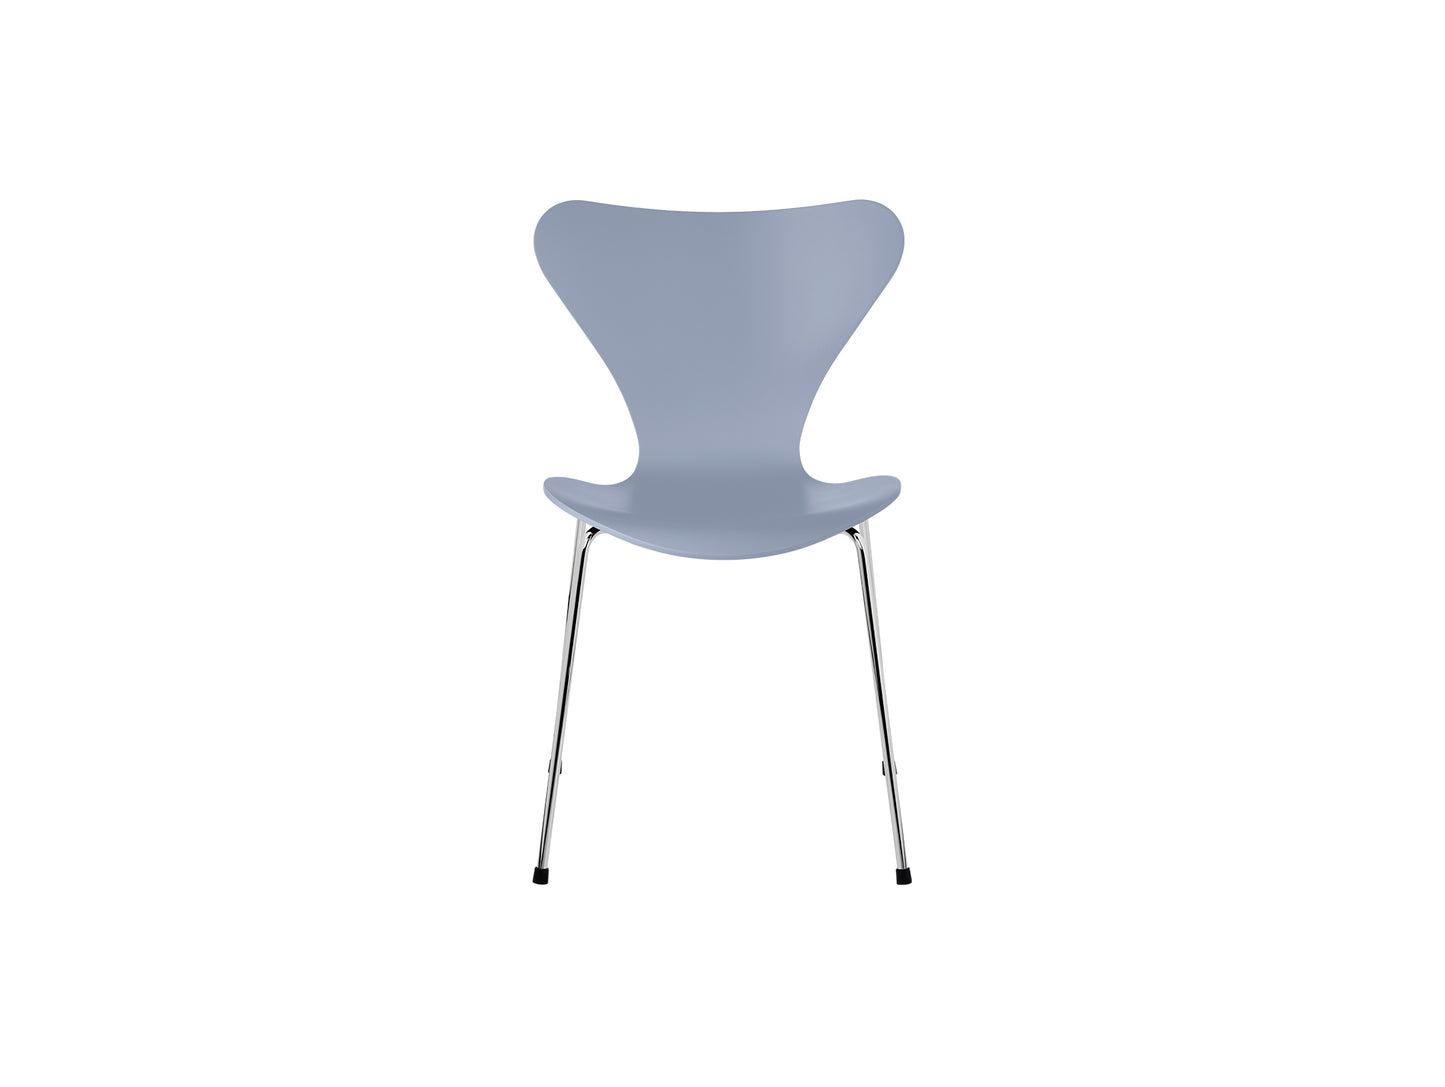 Series 7™ 3107 Dining Chair by Fritz Hansen - Lavender Blue Lacquered Veneer Shell / Chromed Steel